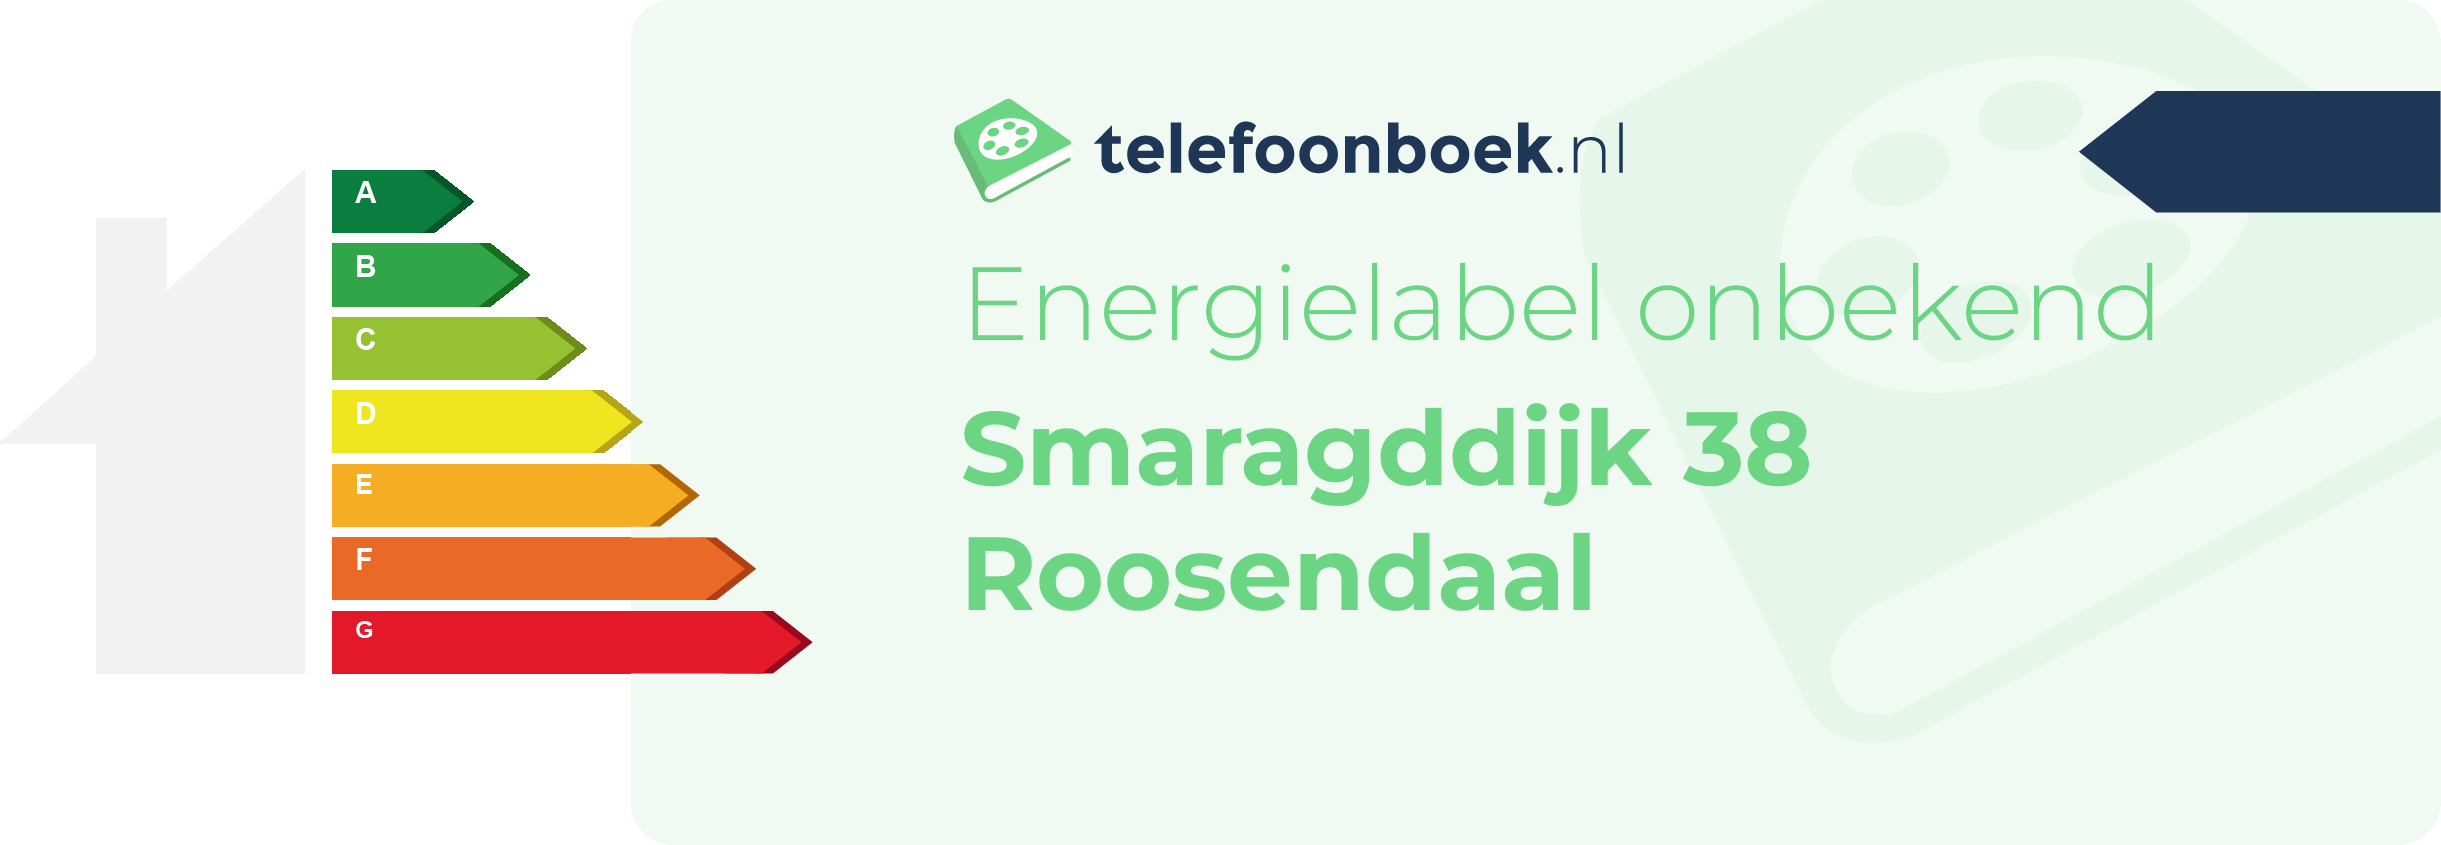 Energielabel Smaragddijk 38 Roosendaal